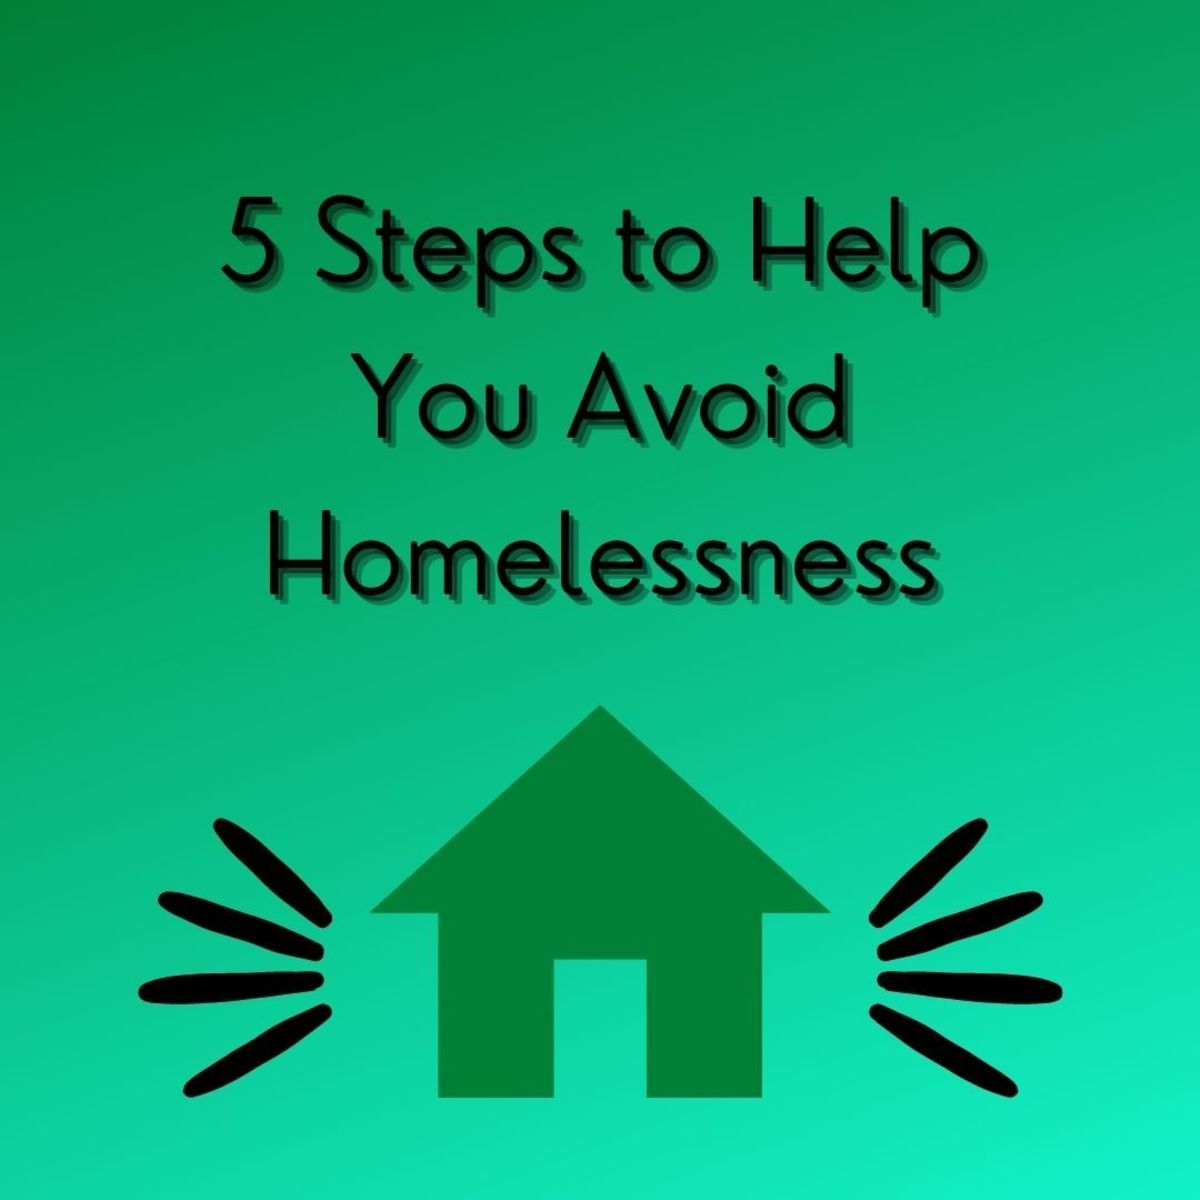 Five Easy Steps to Avoid Homelessness